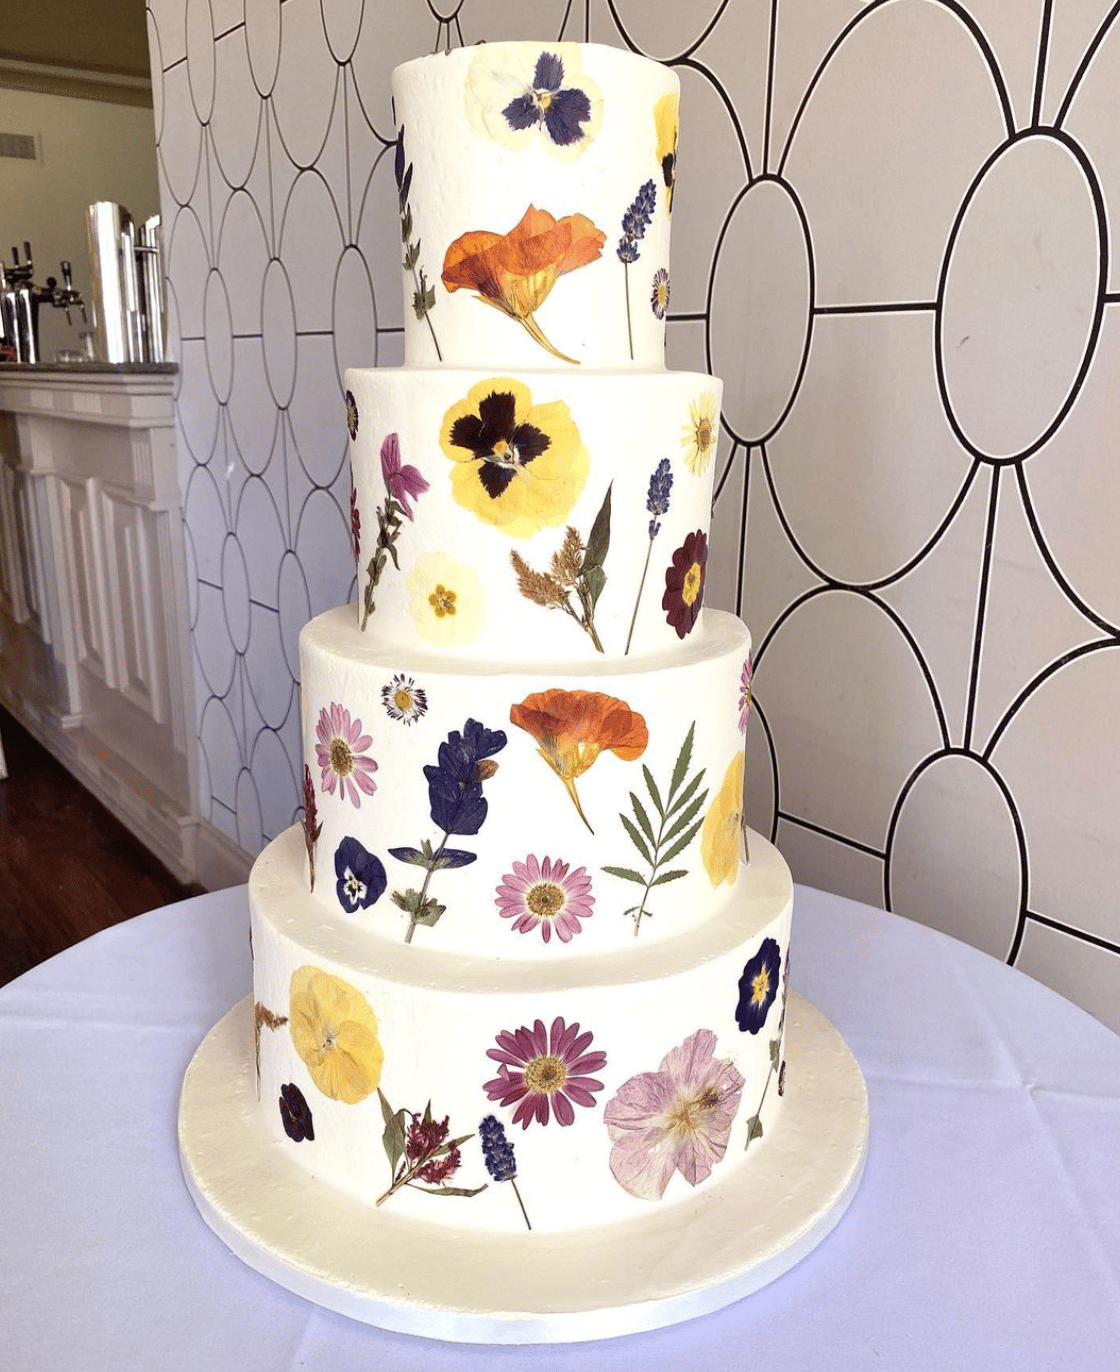 Top 10 Amazing Wedding Cake Ideas to Inspire You! - Wedding Journal